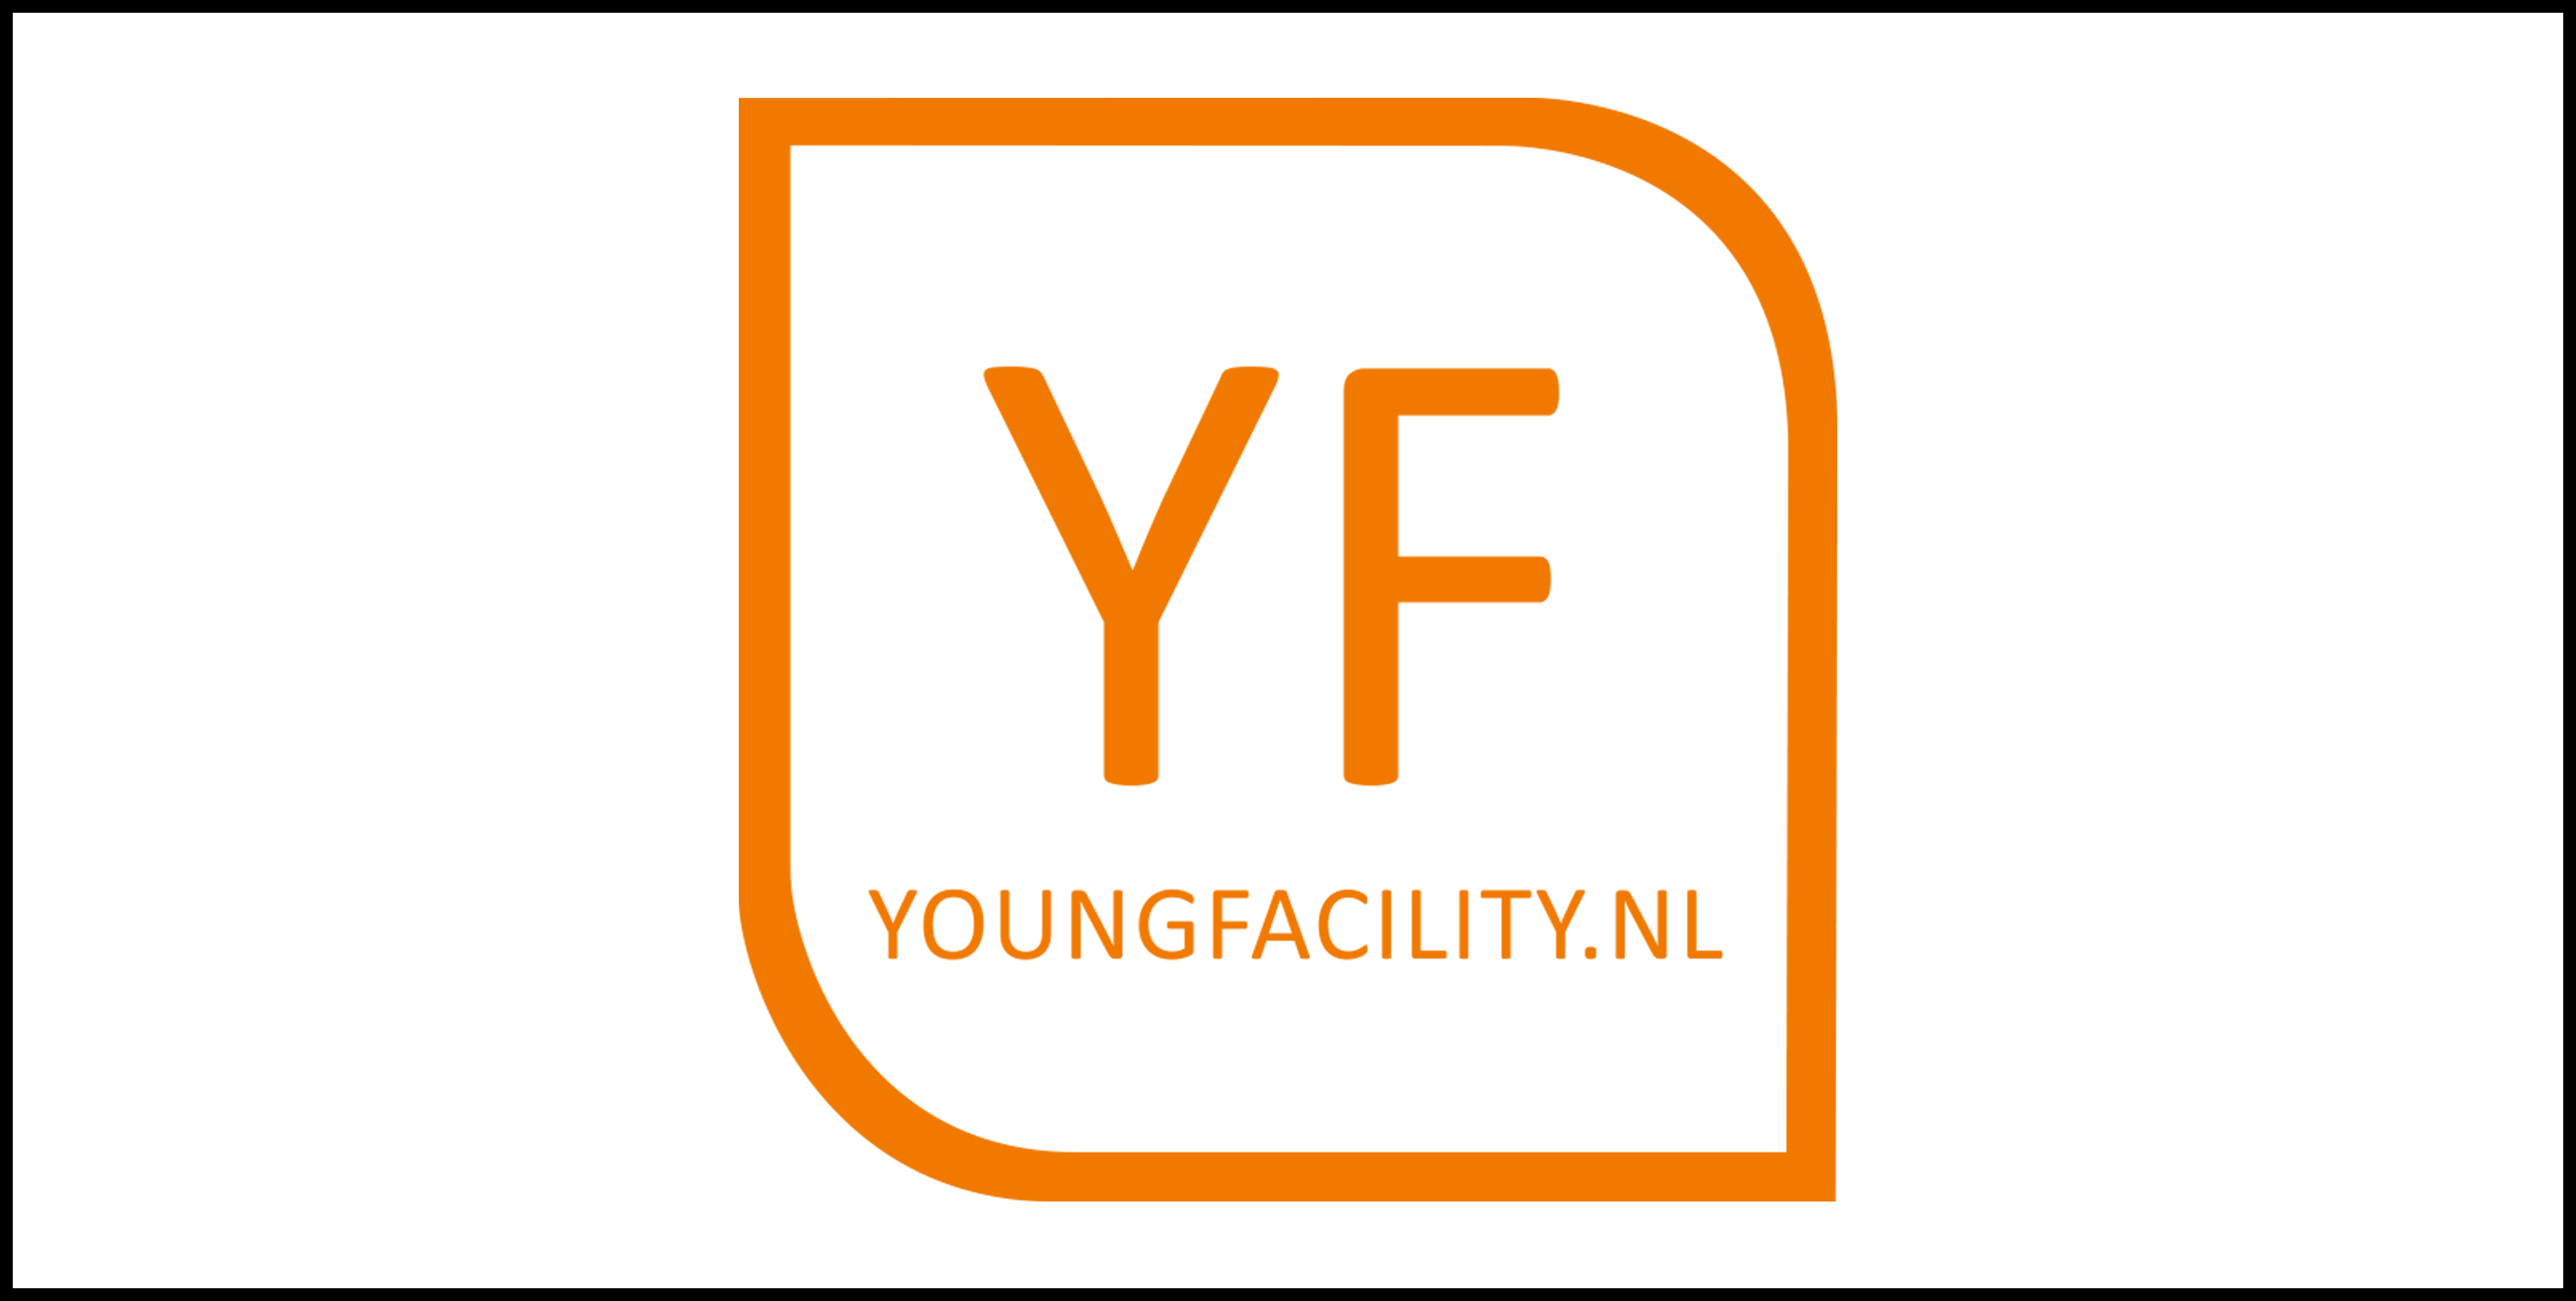 nen3140.net young group facilities